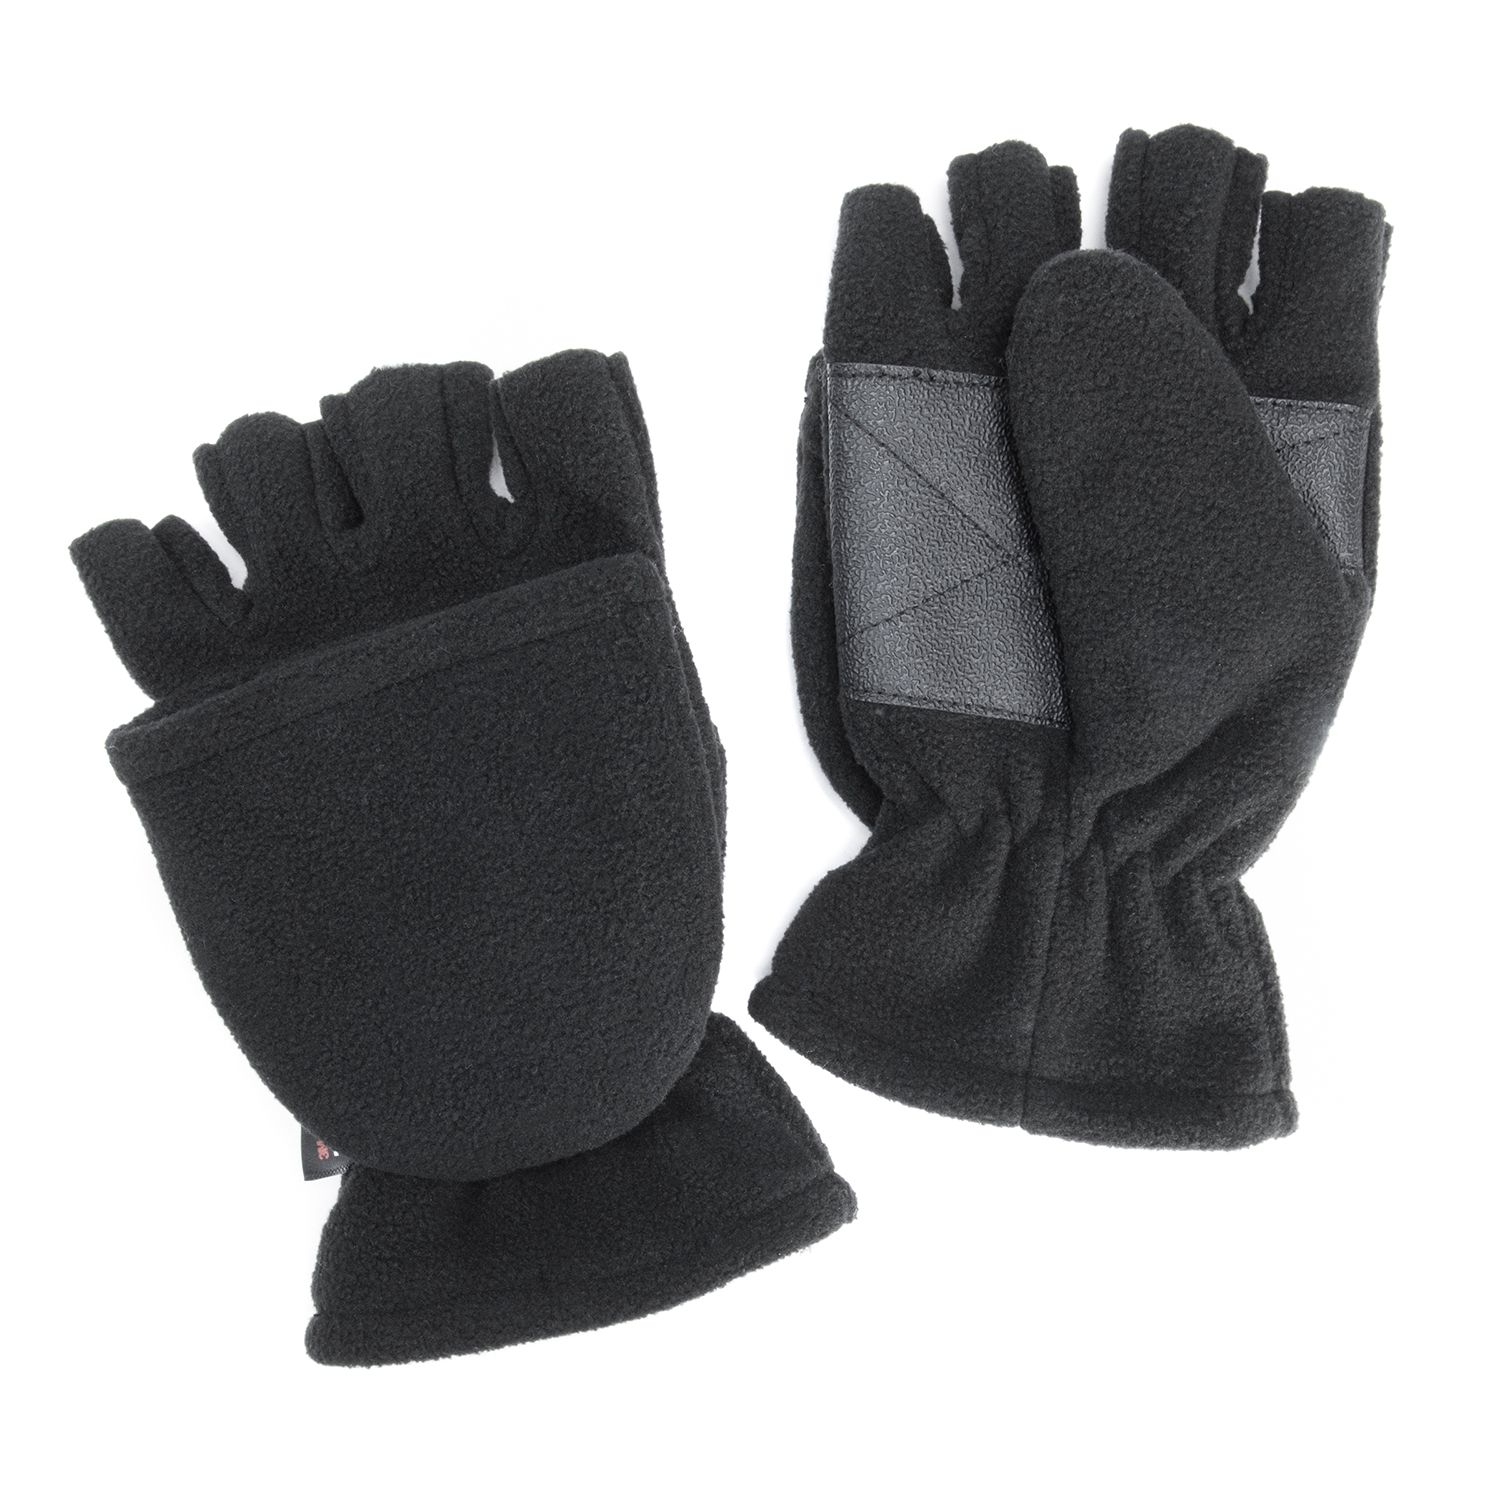 waterproof fingerless gloves